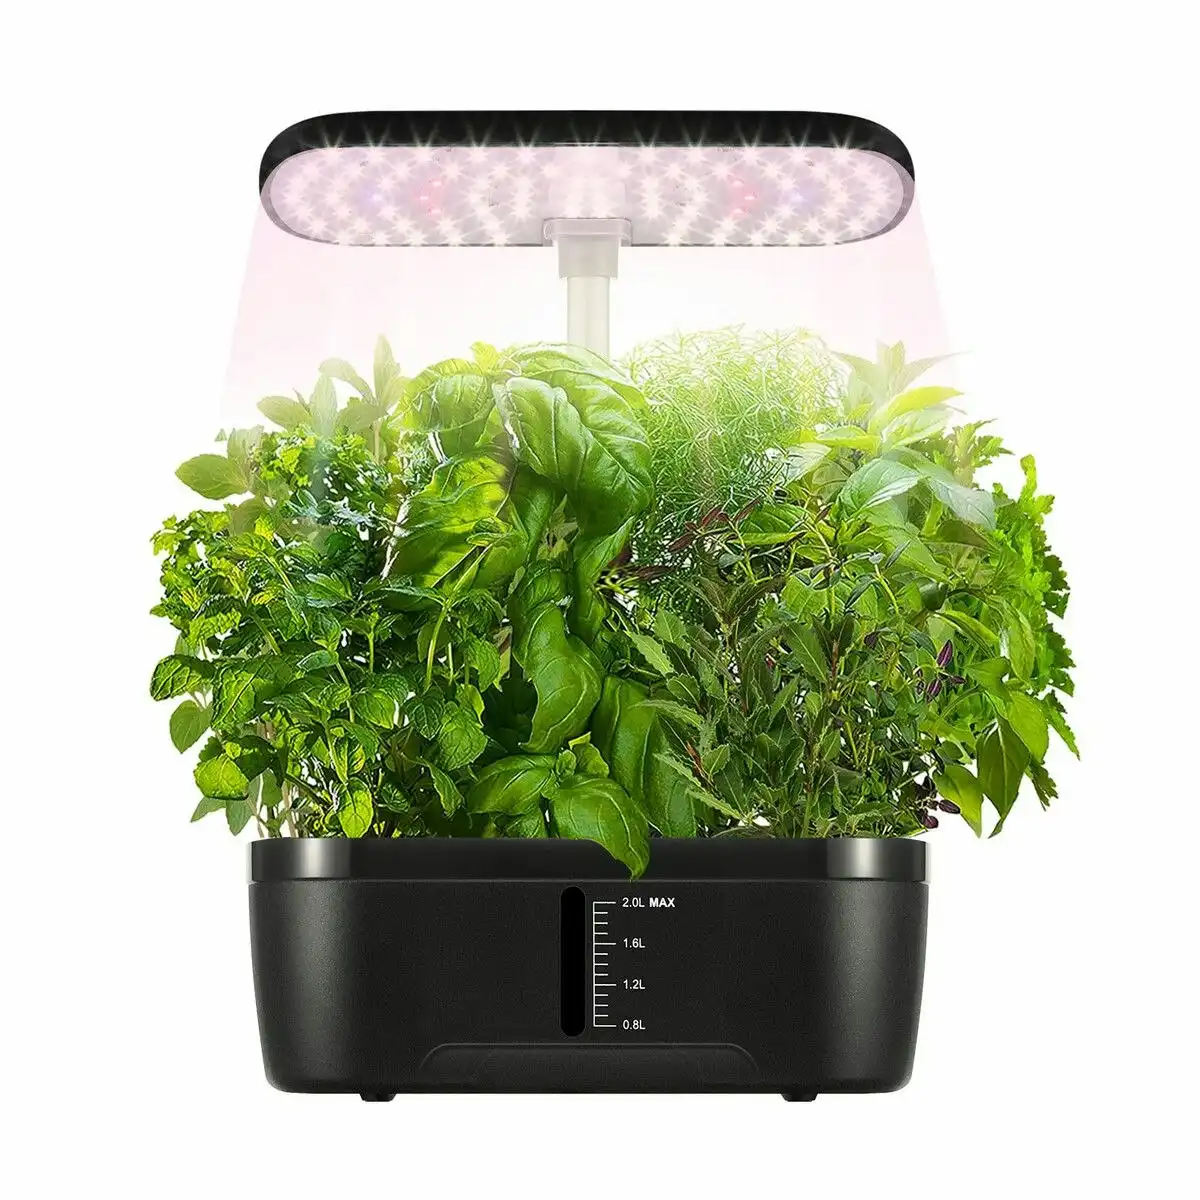 Maxkon Hydroponics Growing System 8 Pods Indoor Herb Garden Kit Full Spectrum LED Grow Light Smart Water Pump Tank Planter Plant Germination